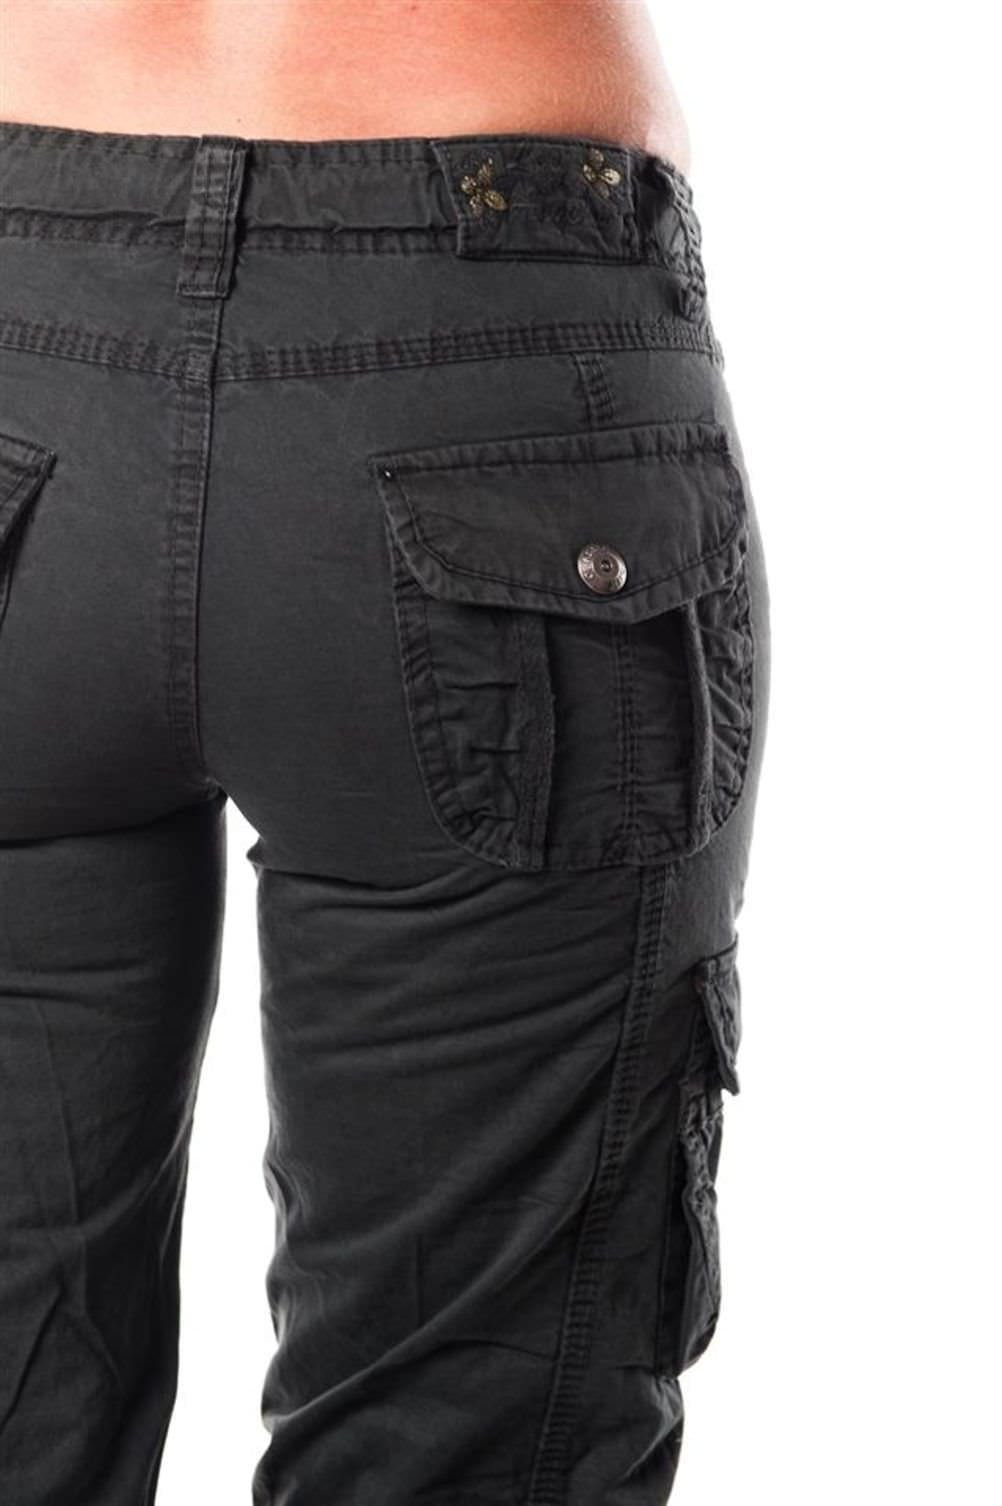 women's multi pocket pants